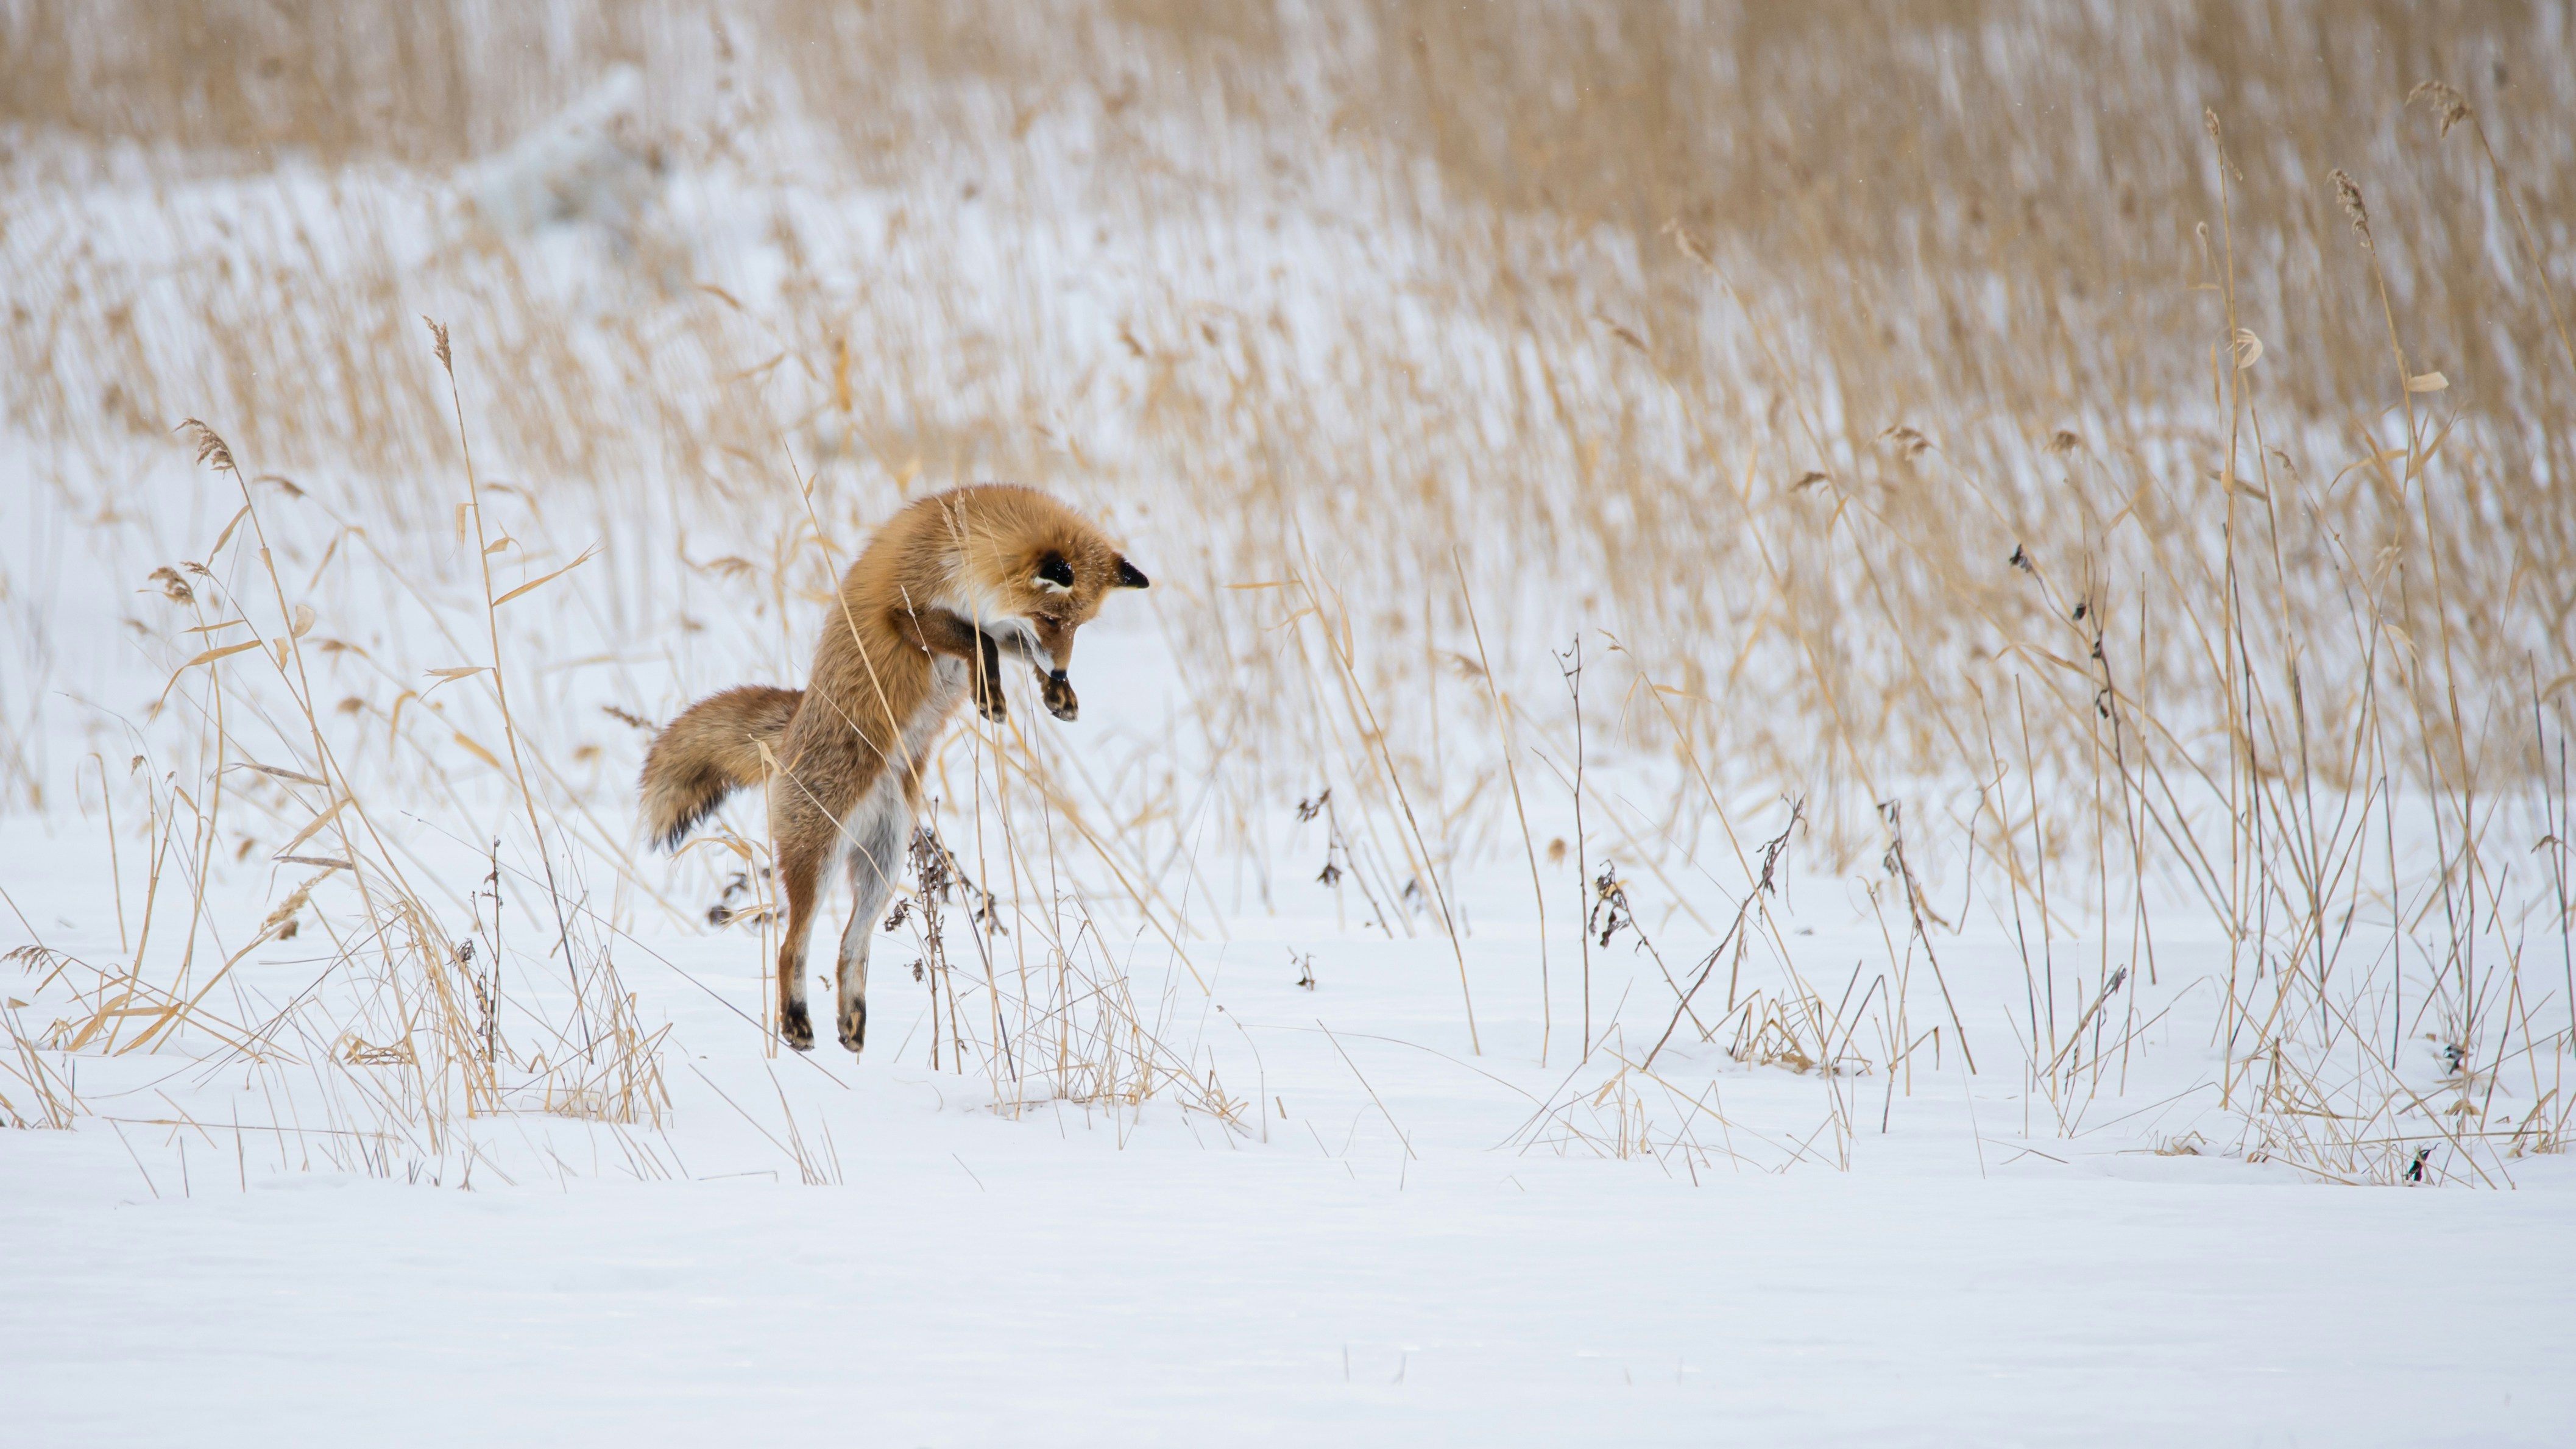 Jumping fox on snow